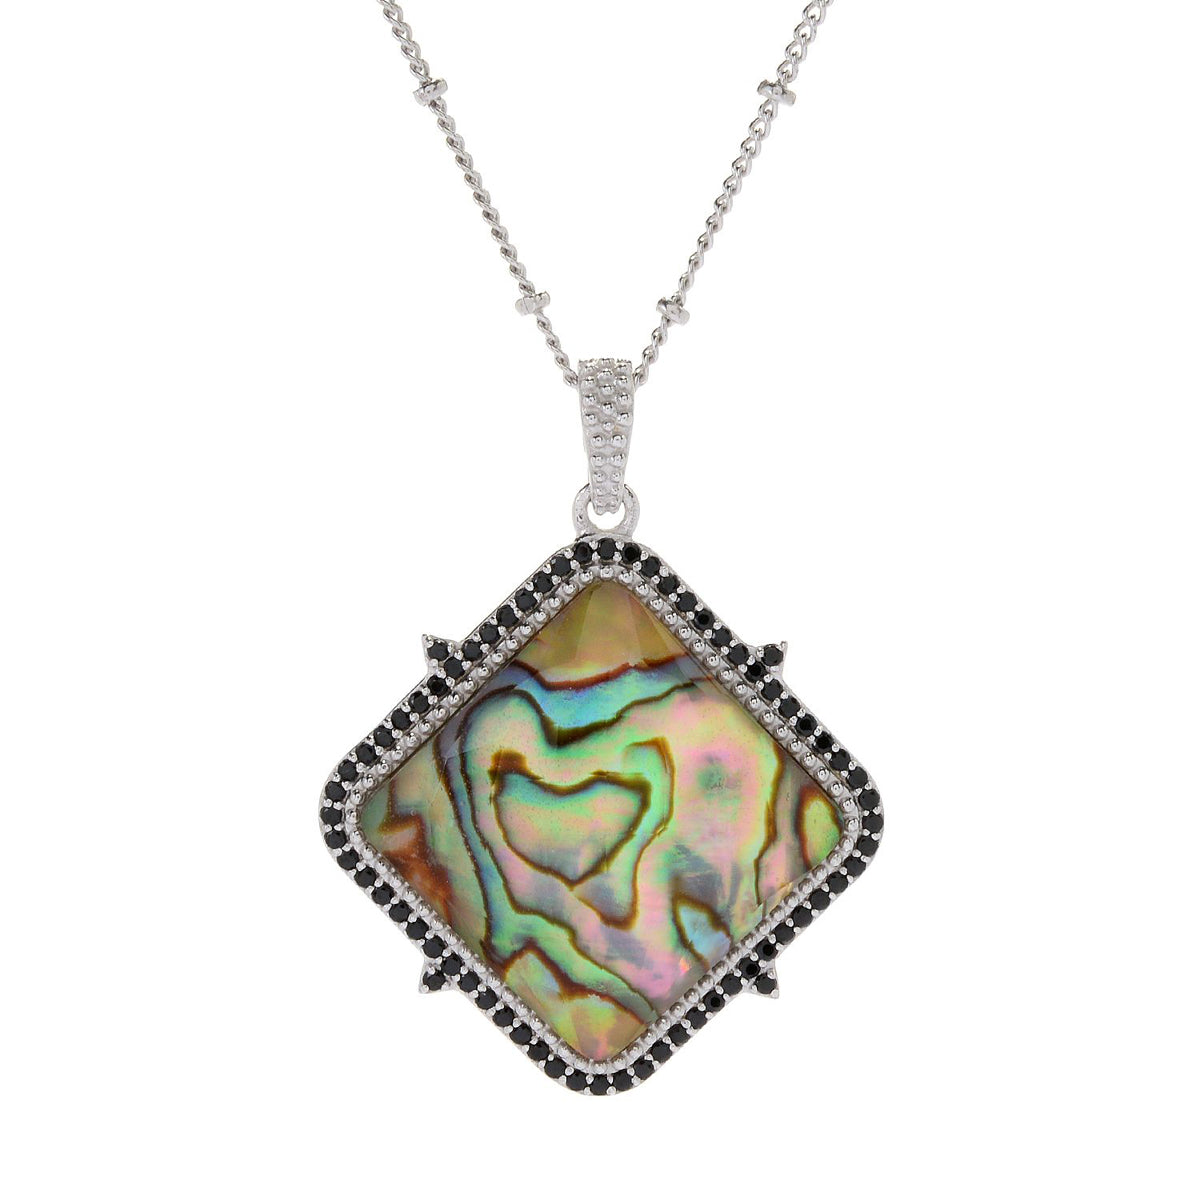 Gemstone Long Chain Statement Pendant Necklace, xmas jewelry present